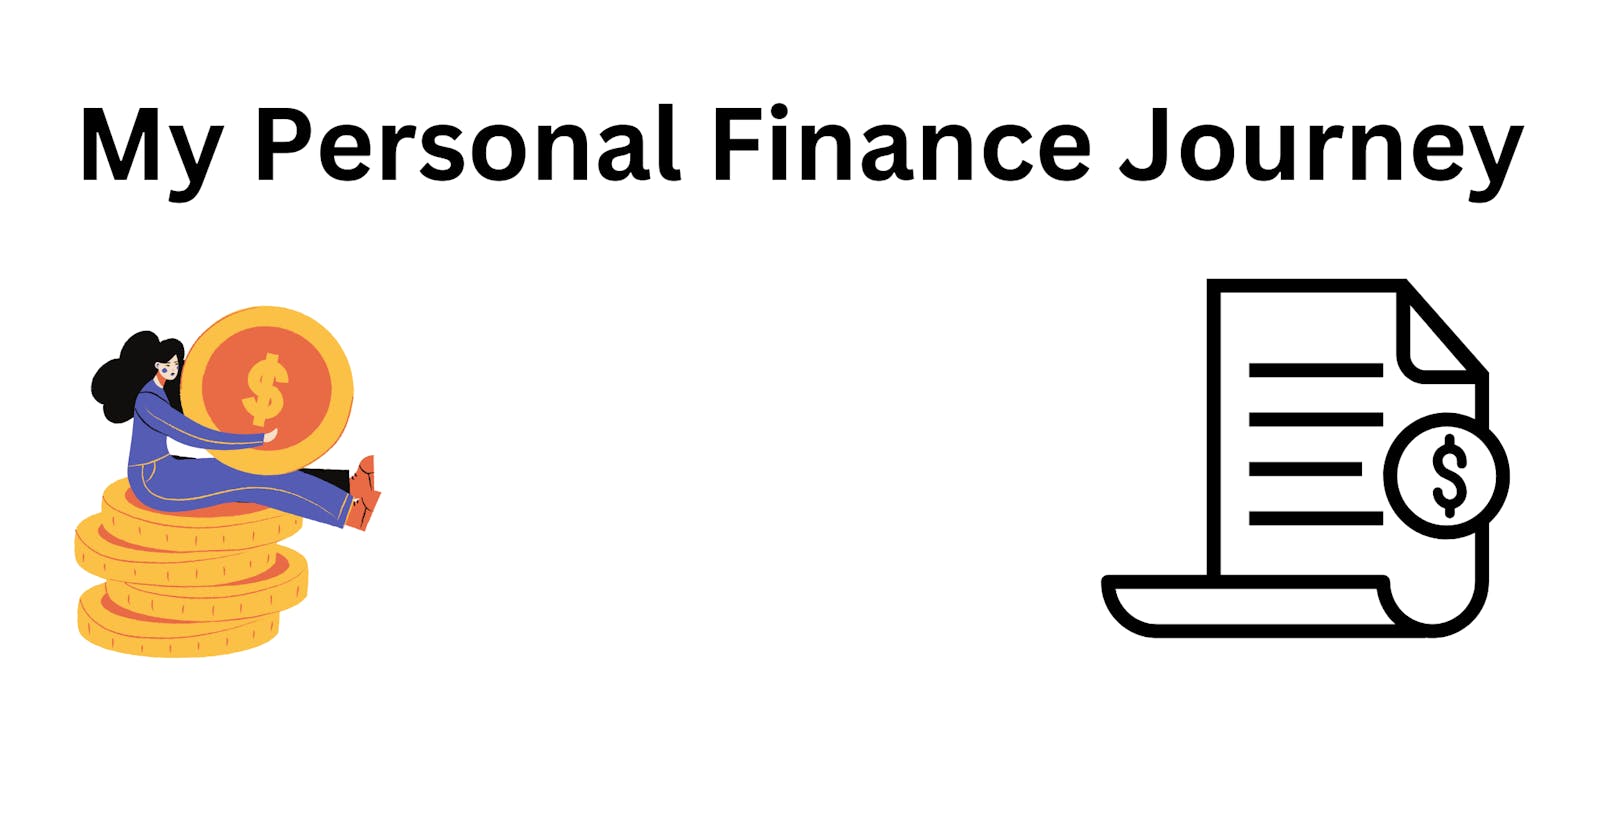 My personal finance journey